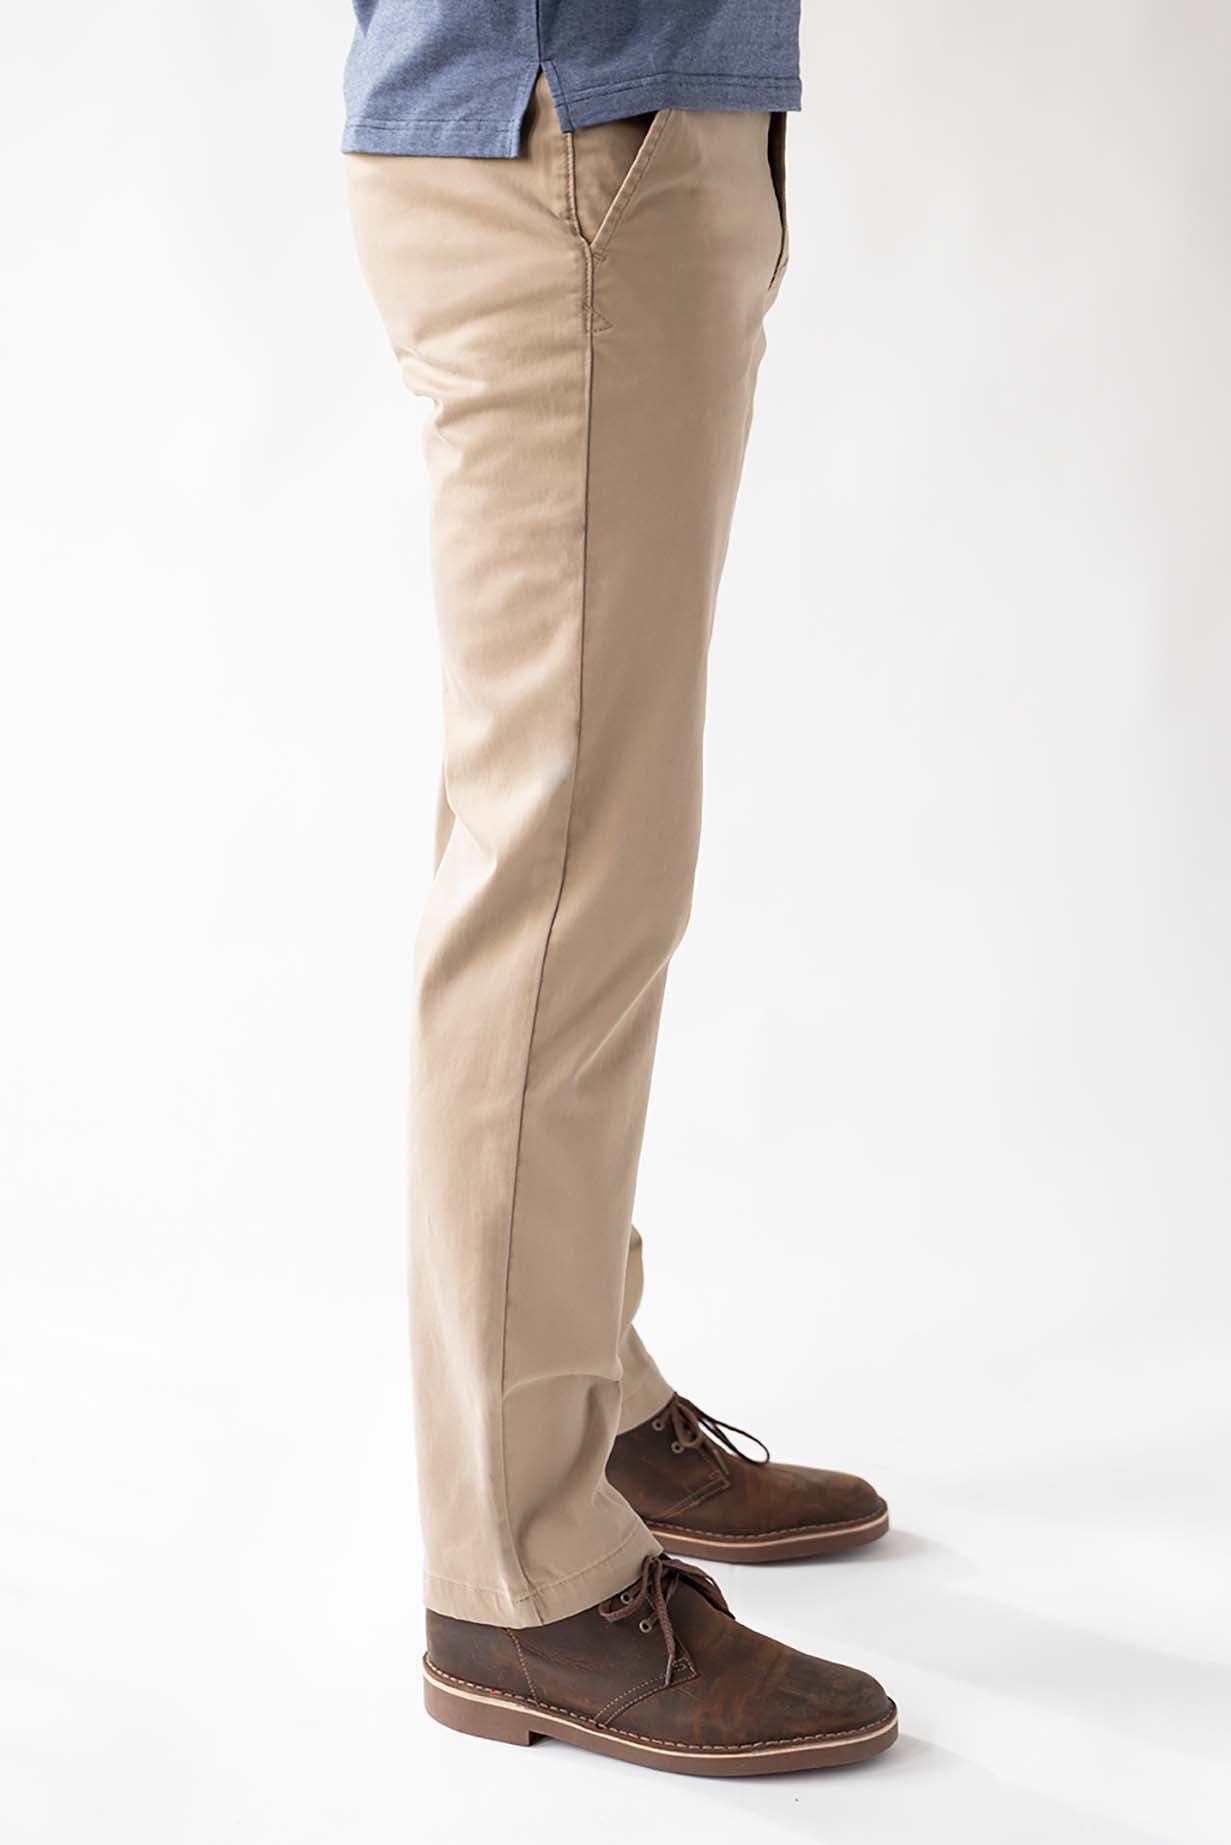 Buy ARROW SPORT Solid Cotton Slim Fit Men's Casual Trousers | Shoppers Stop